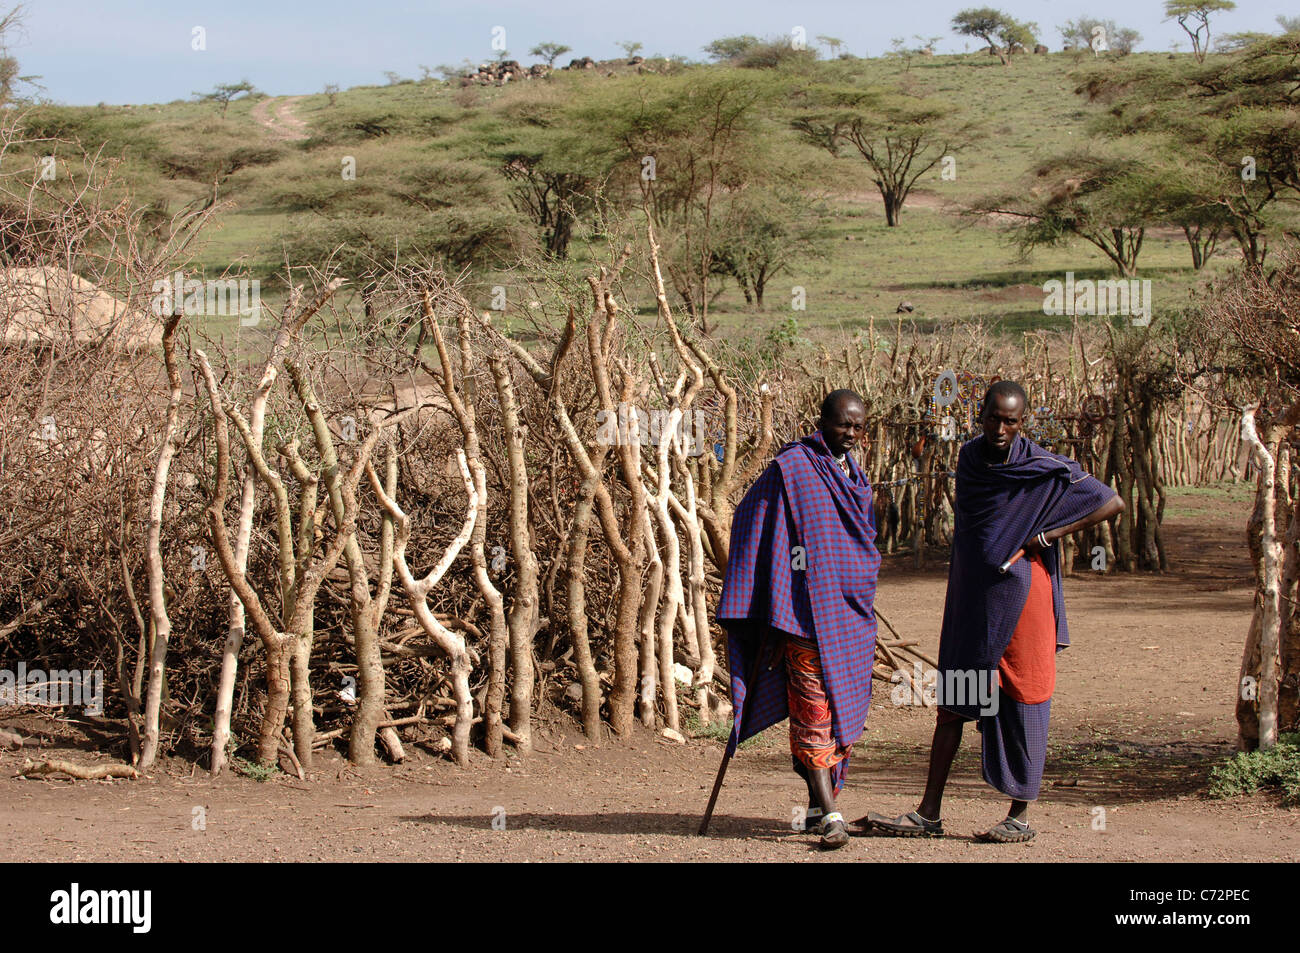 Africa. Tanzania. On March, 5th 2009 . Maasai village. A double portrait maasai men. Savanna. Stock Photo